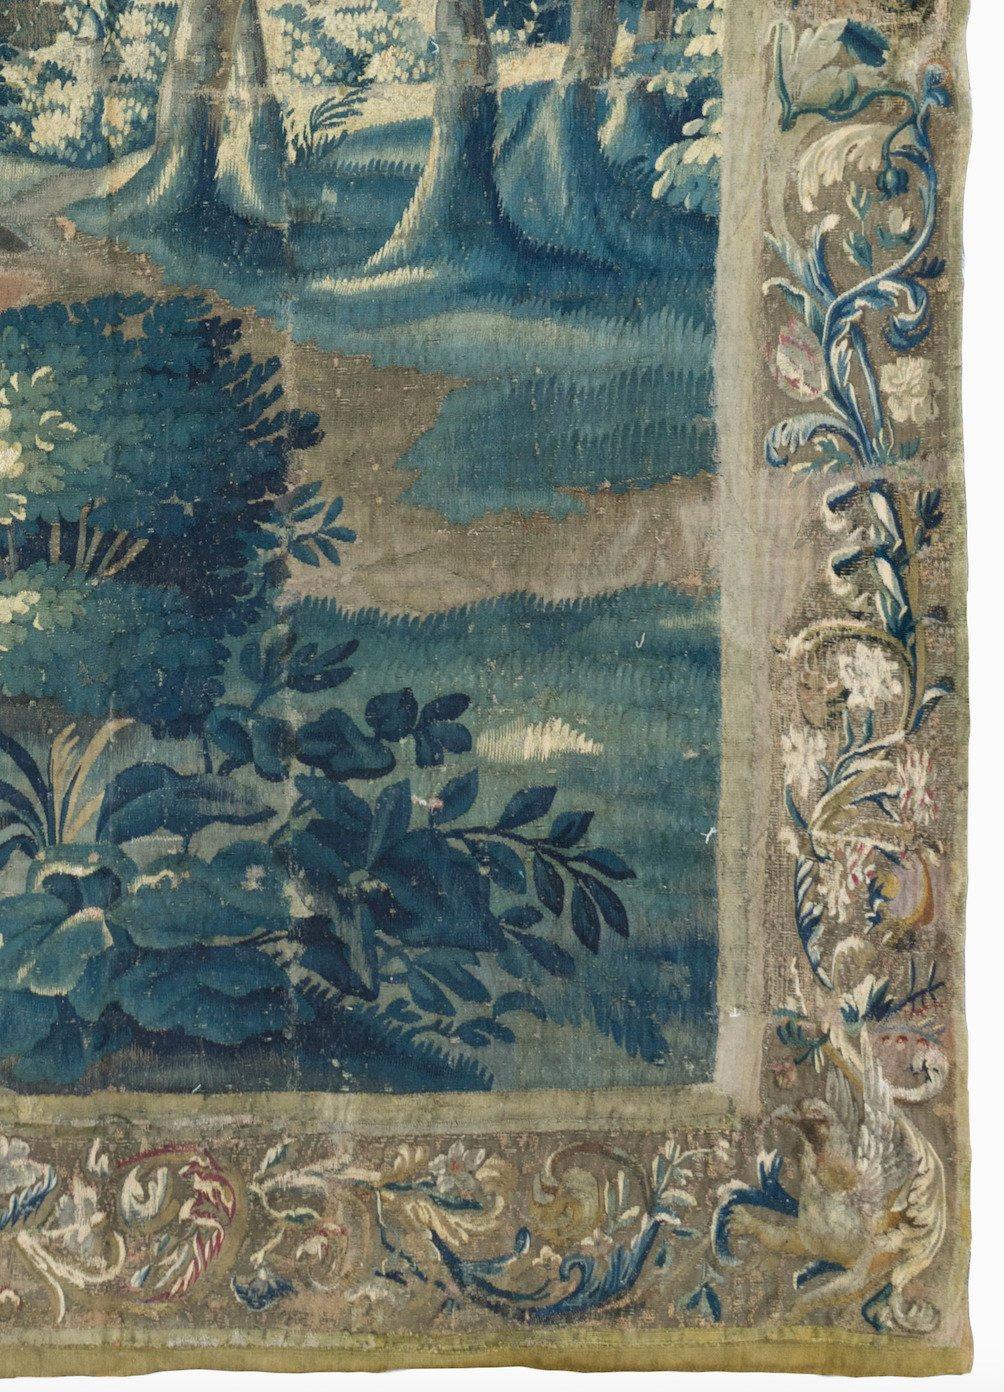 Hand-Woven Antique 18th Century Baroque Flemish Verdure Landscape Tapestry